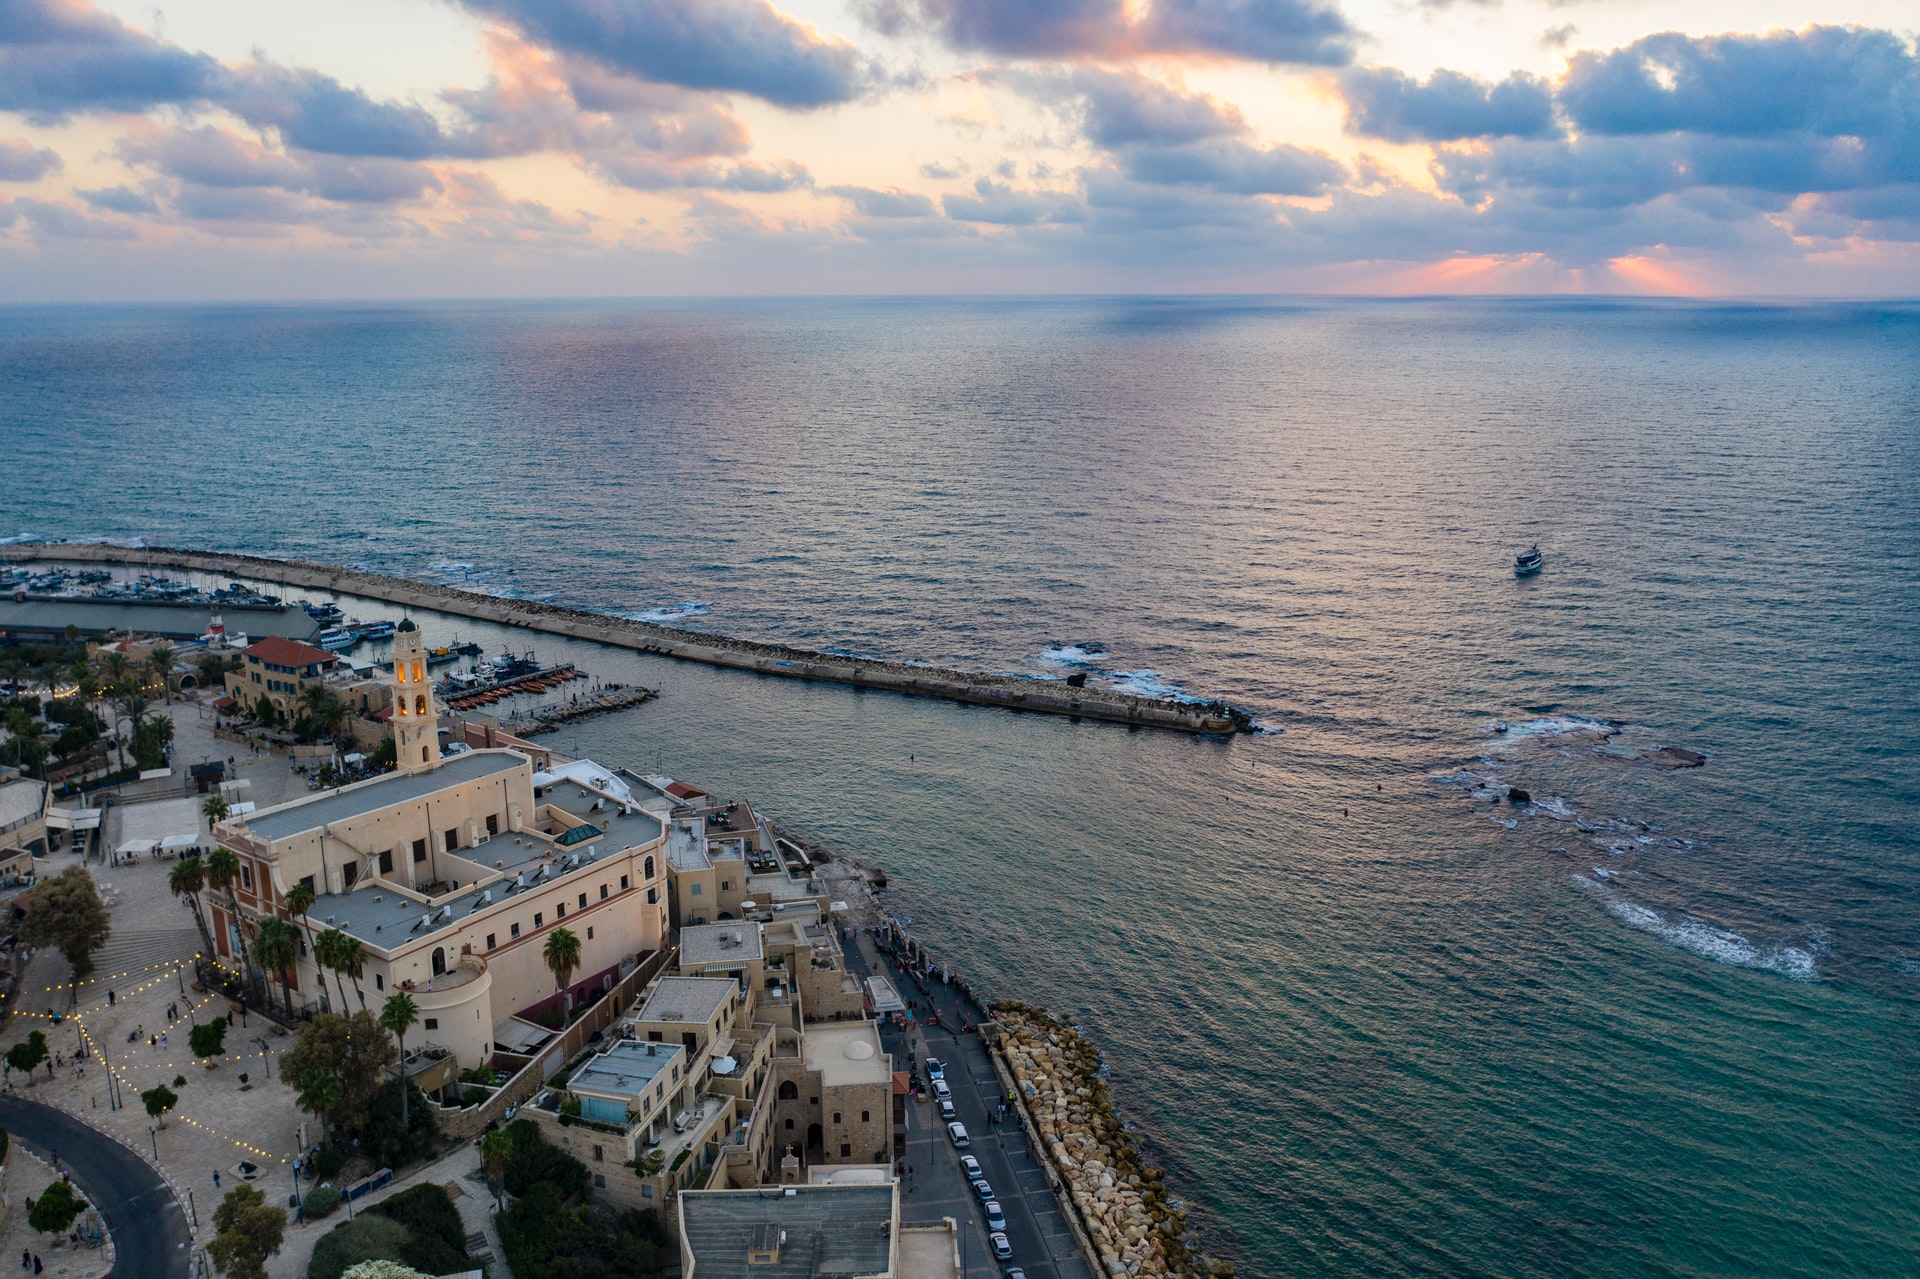 Jaffa port area